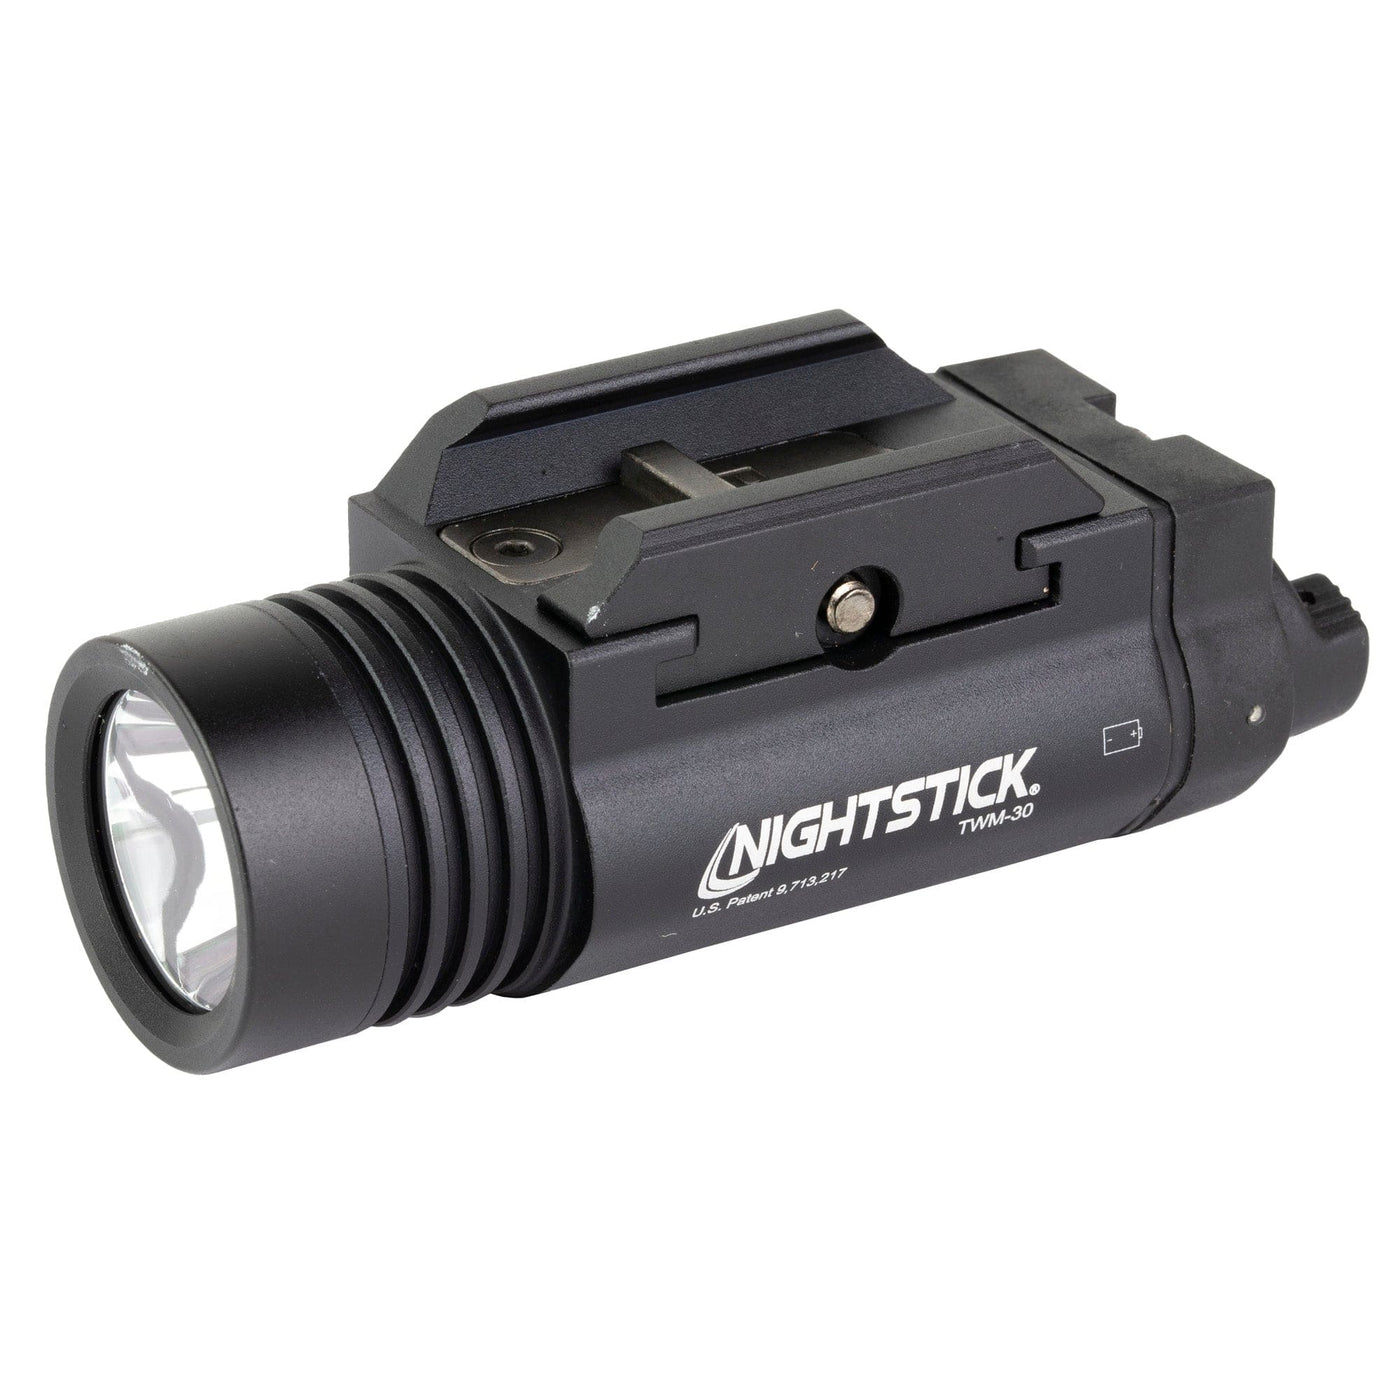 Nightstick Nightstick Full Size Pistol Weapon Light Black 350 Lumens Black / 350 lumen Accessories